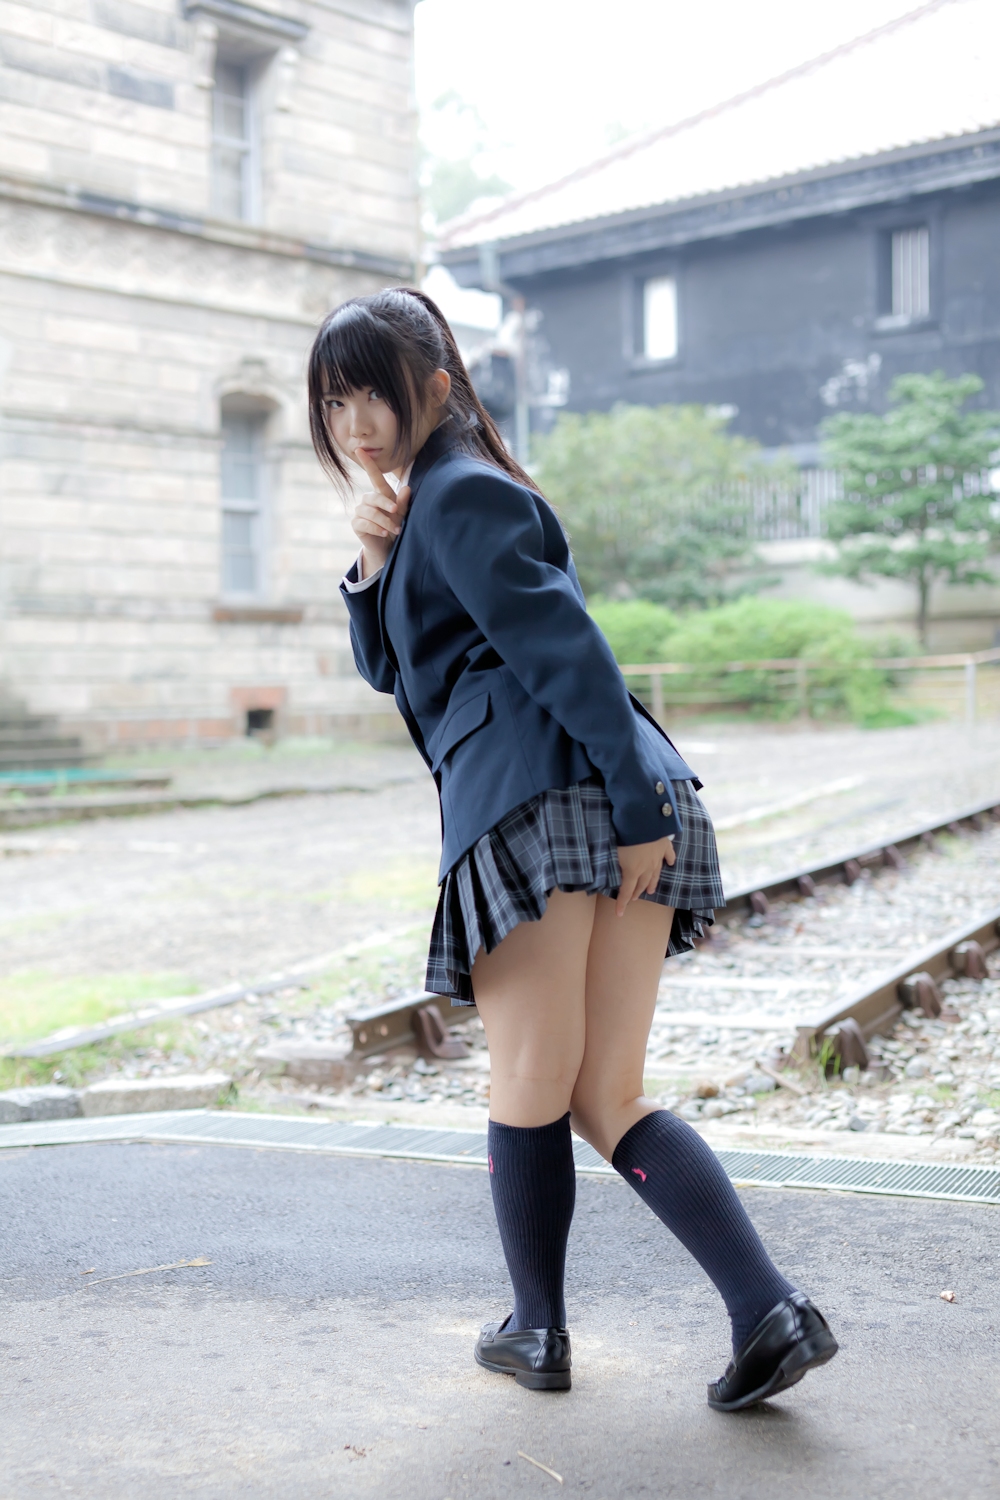 Japanese Schoolgirl Handjobs